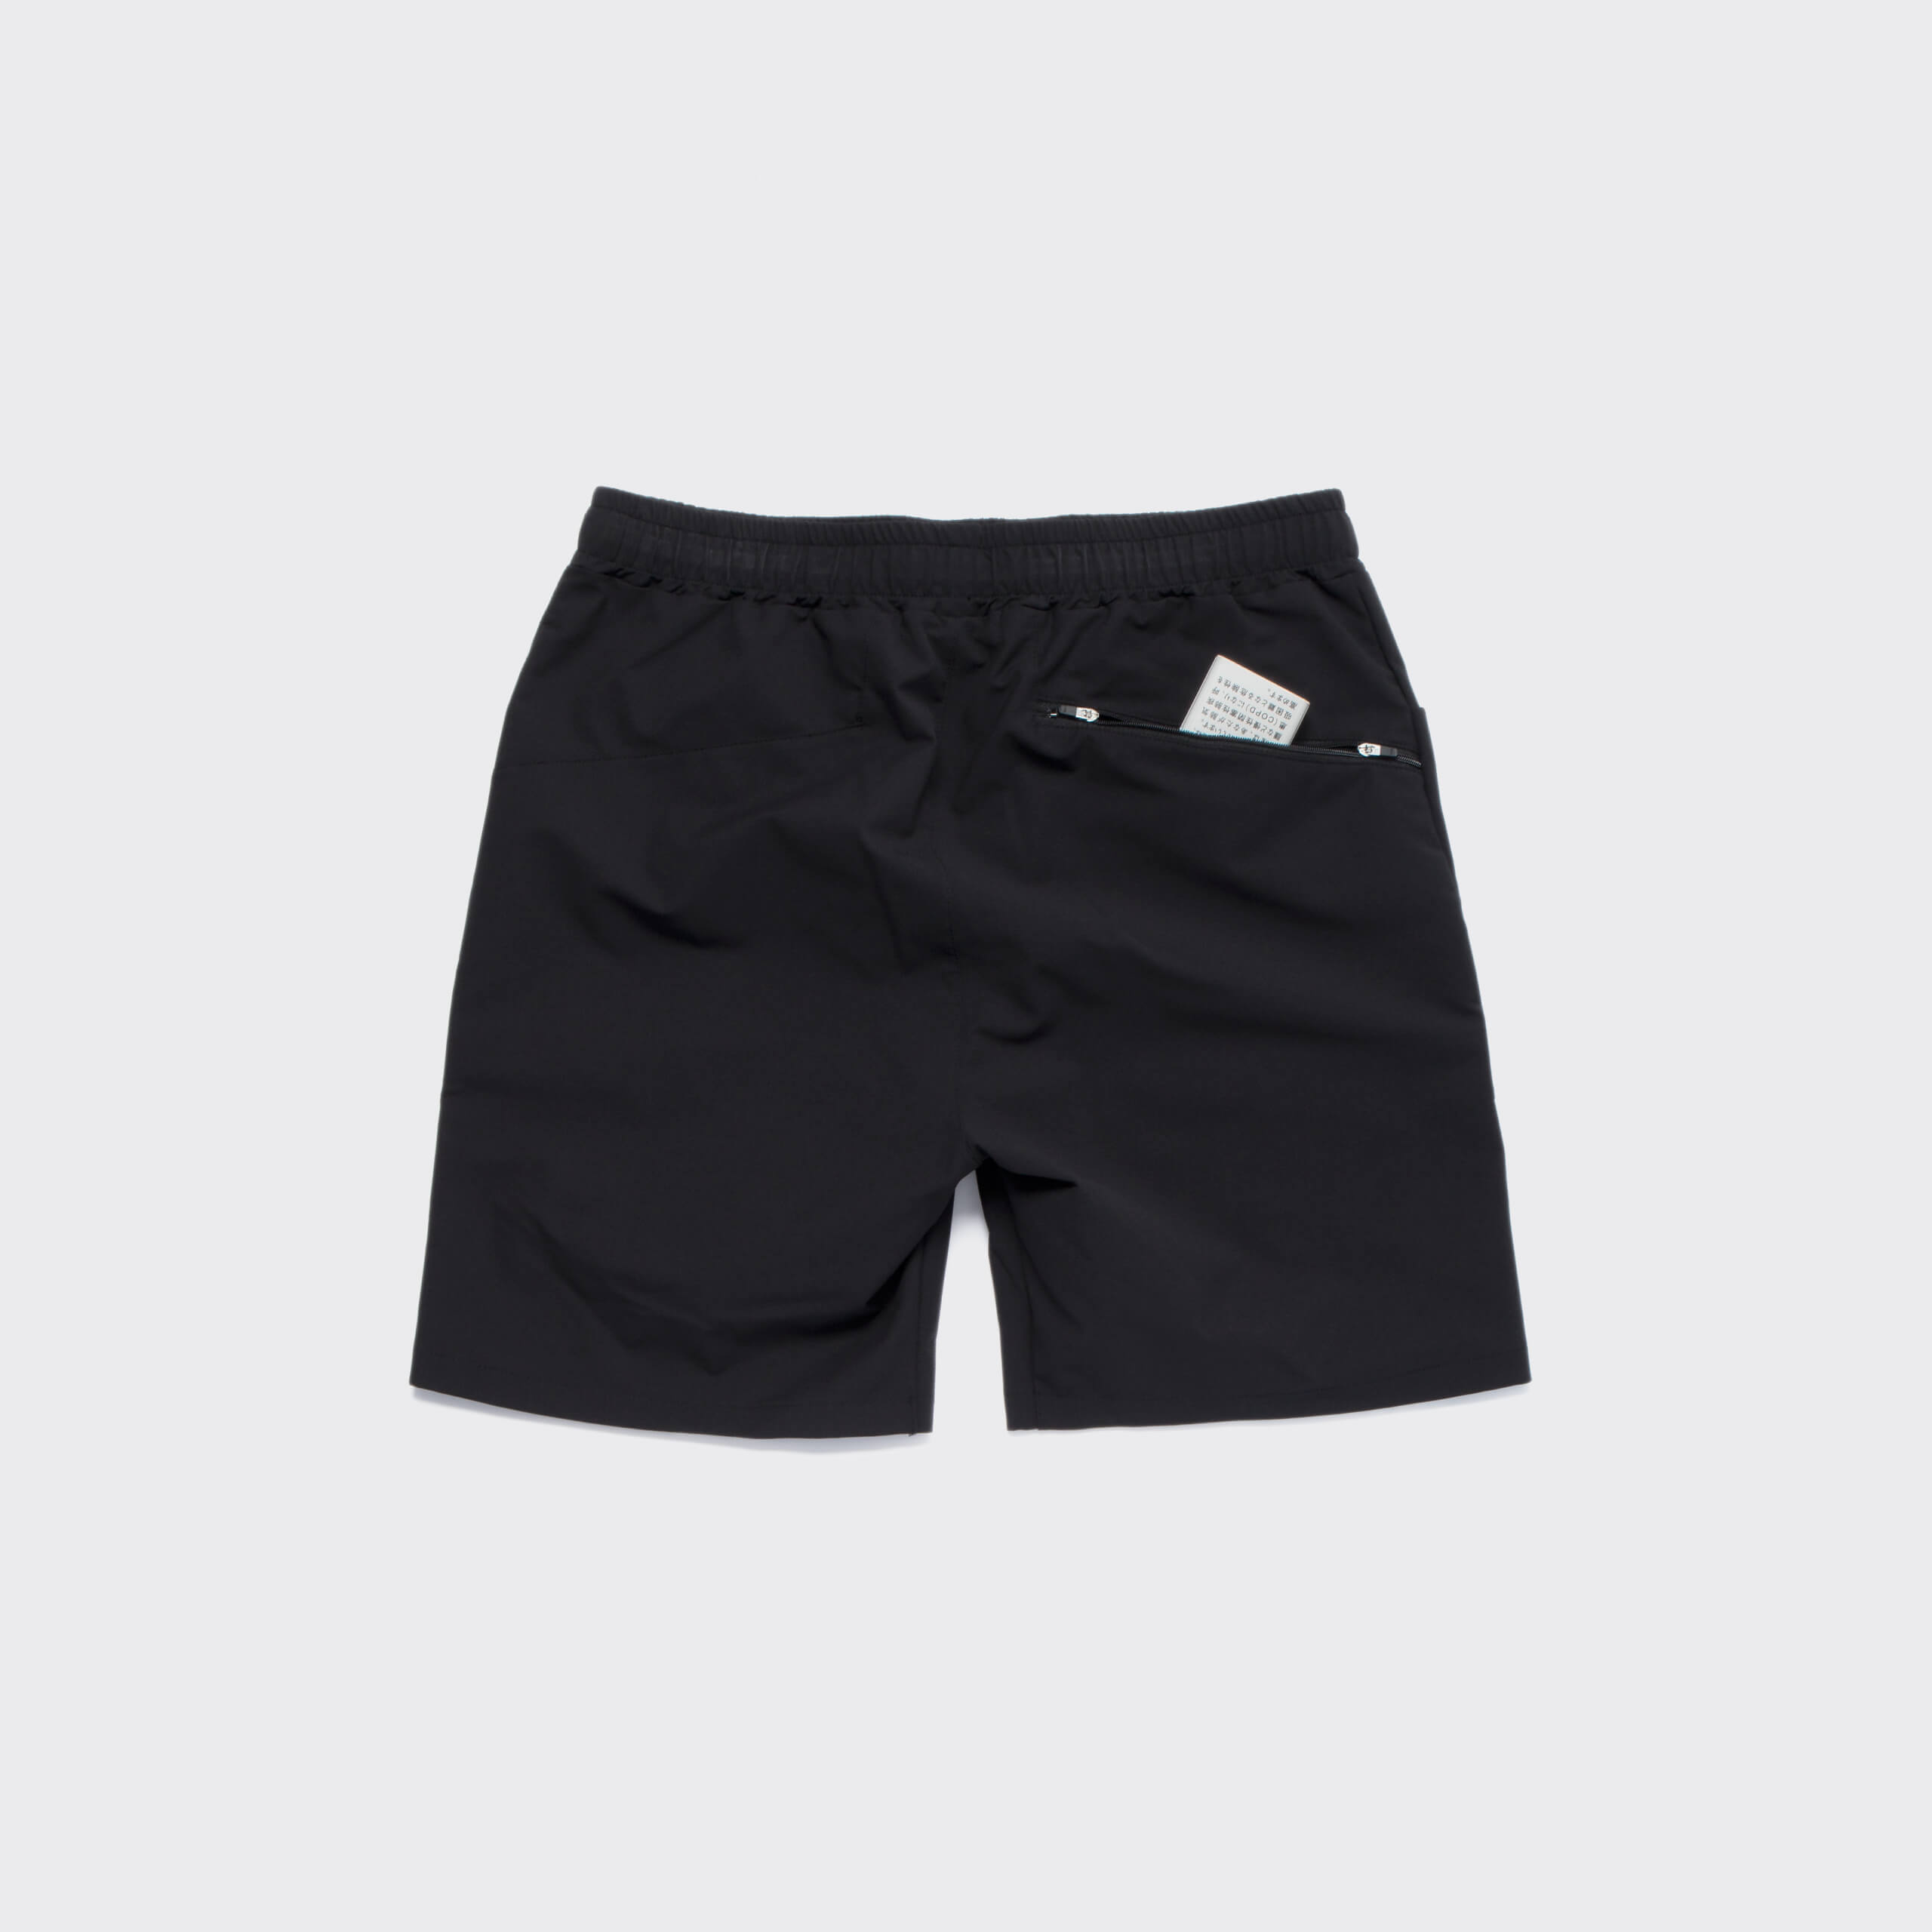 movit-fit-stretch-pocket-shorts-black_p1